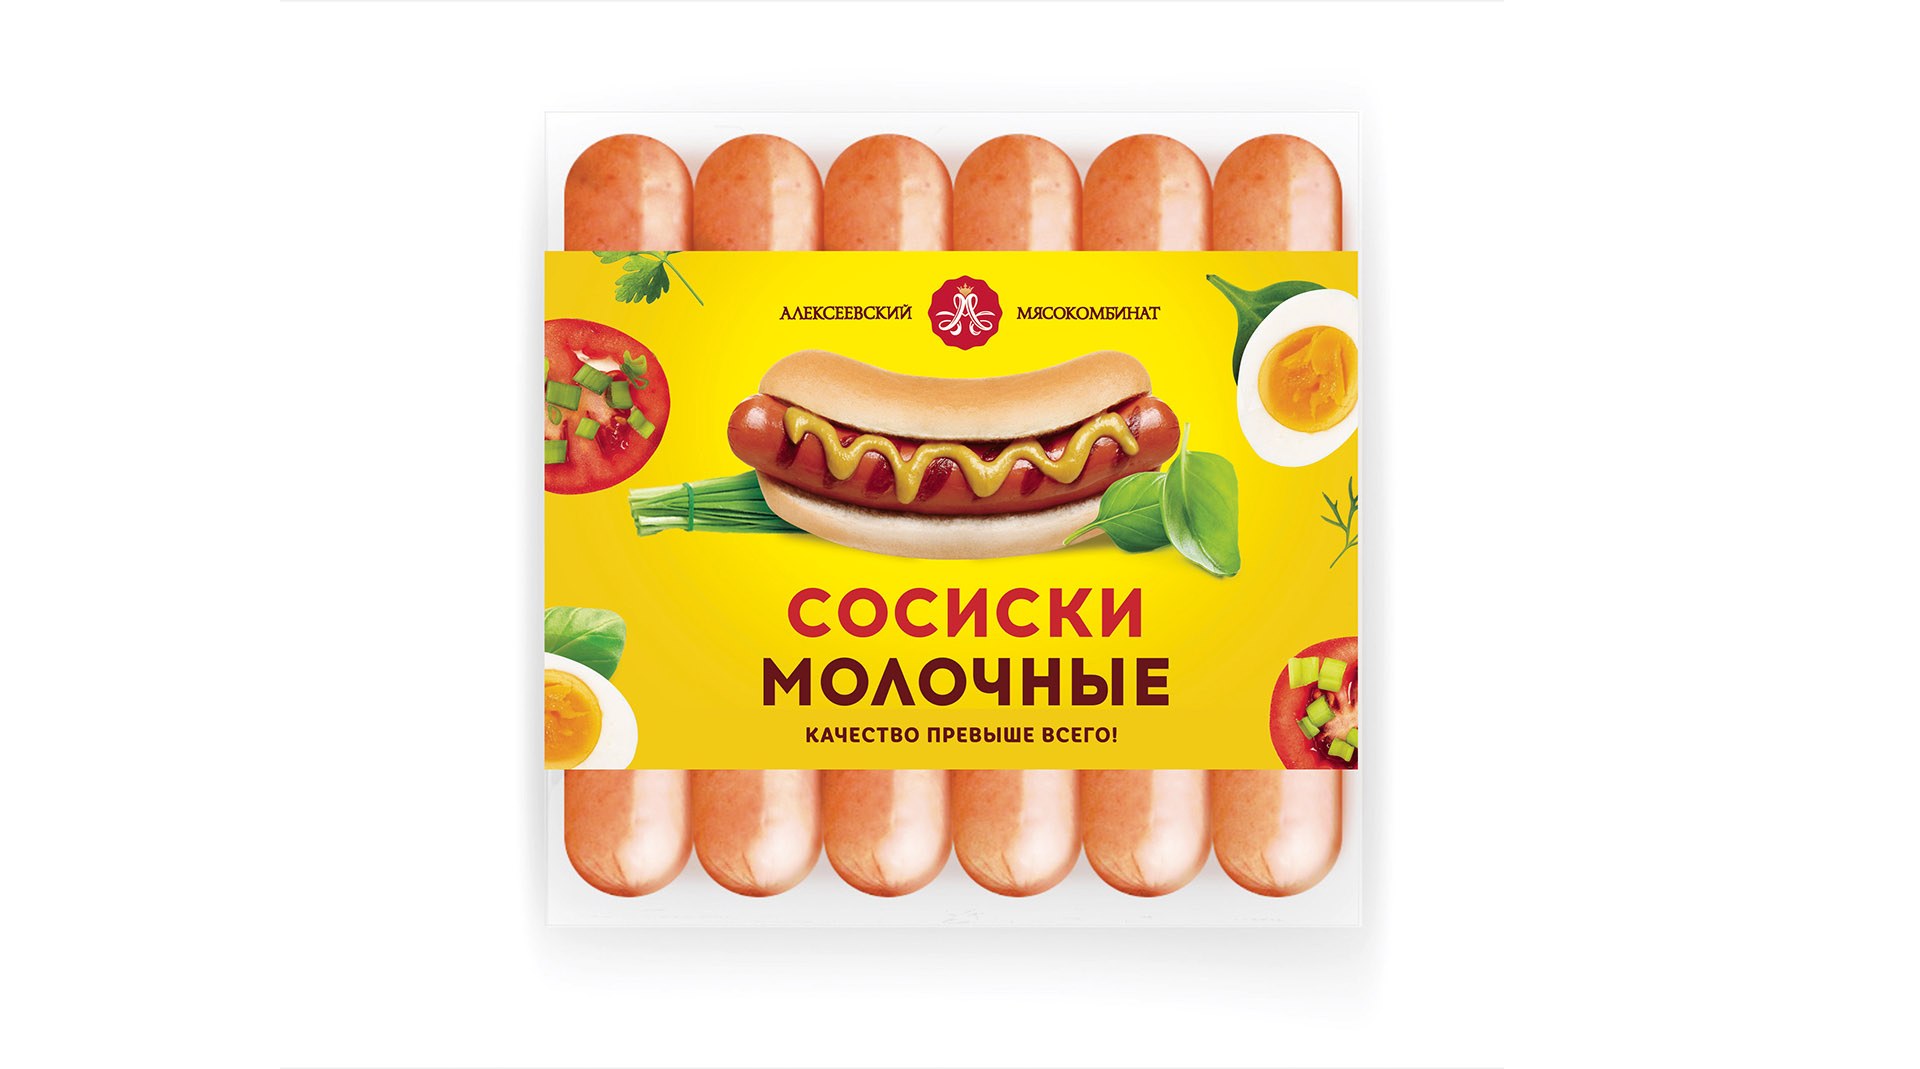 Design of sausage packaging